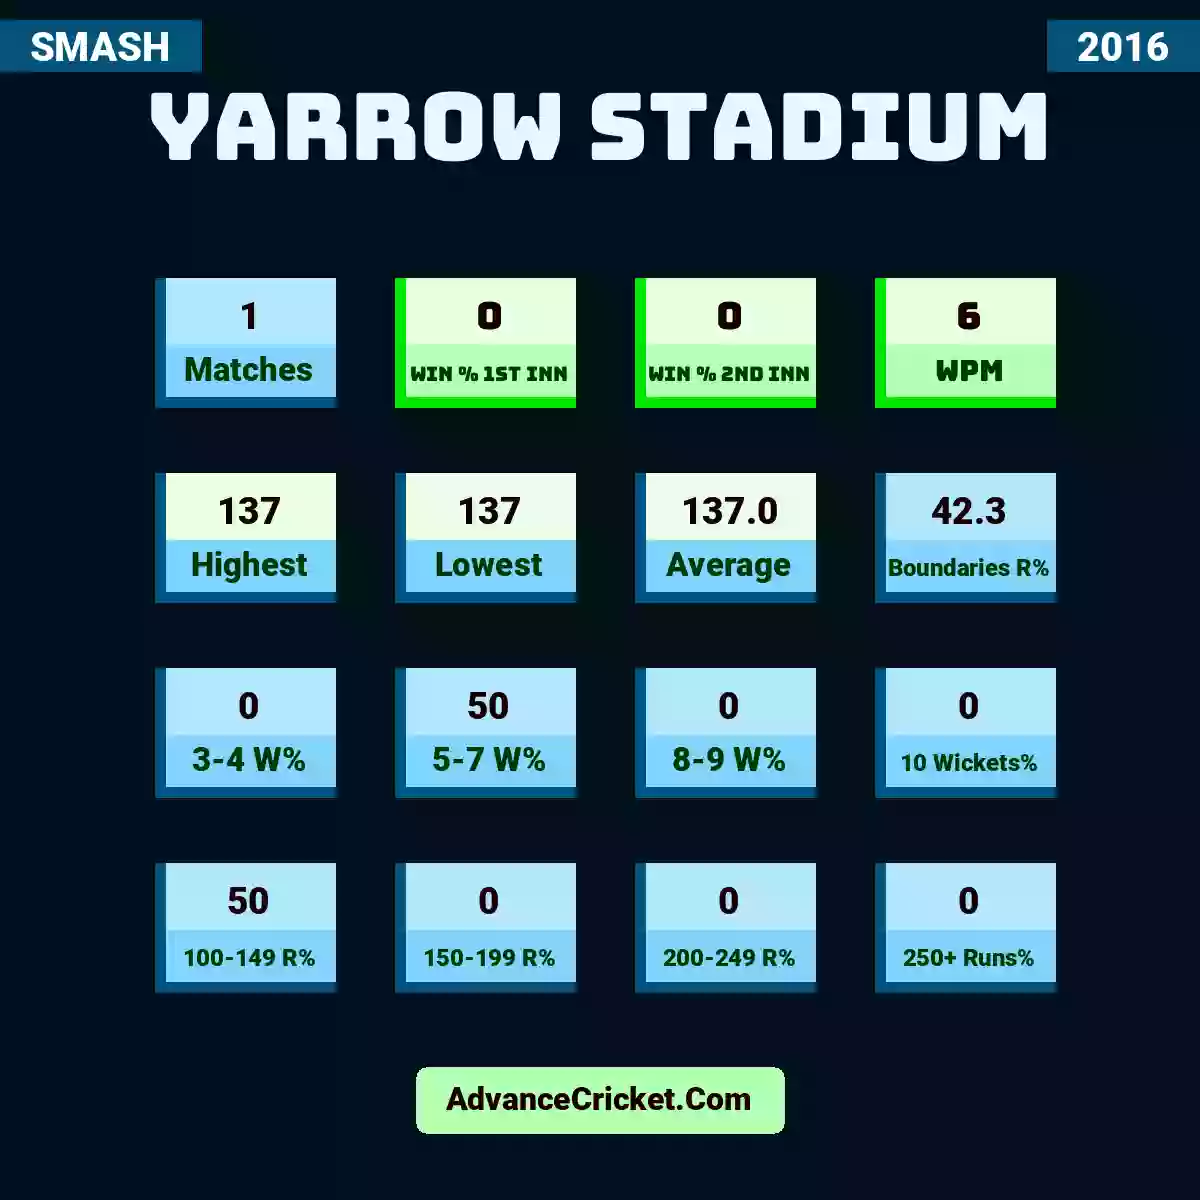 Image showing Yarrow Stadium with Matches: 1, Win % 1st Inn: 0, Win % 2nd Inn: 0, WPM: 6, Highest: 137, Lowest: 137, Average: 137.0, Boundaries R%: 42.3, 3-4 W%: 0, 5-7 W%: 50, 8-9 W%: 0, 10 Wickets%: 0, 100-149 R%: 50, 150-199 R%: 0, 200-249 R%: 0, 250+ Runs%: 0.